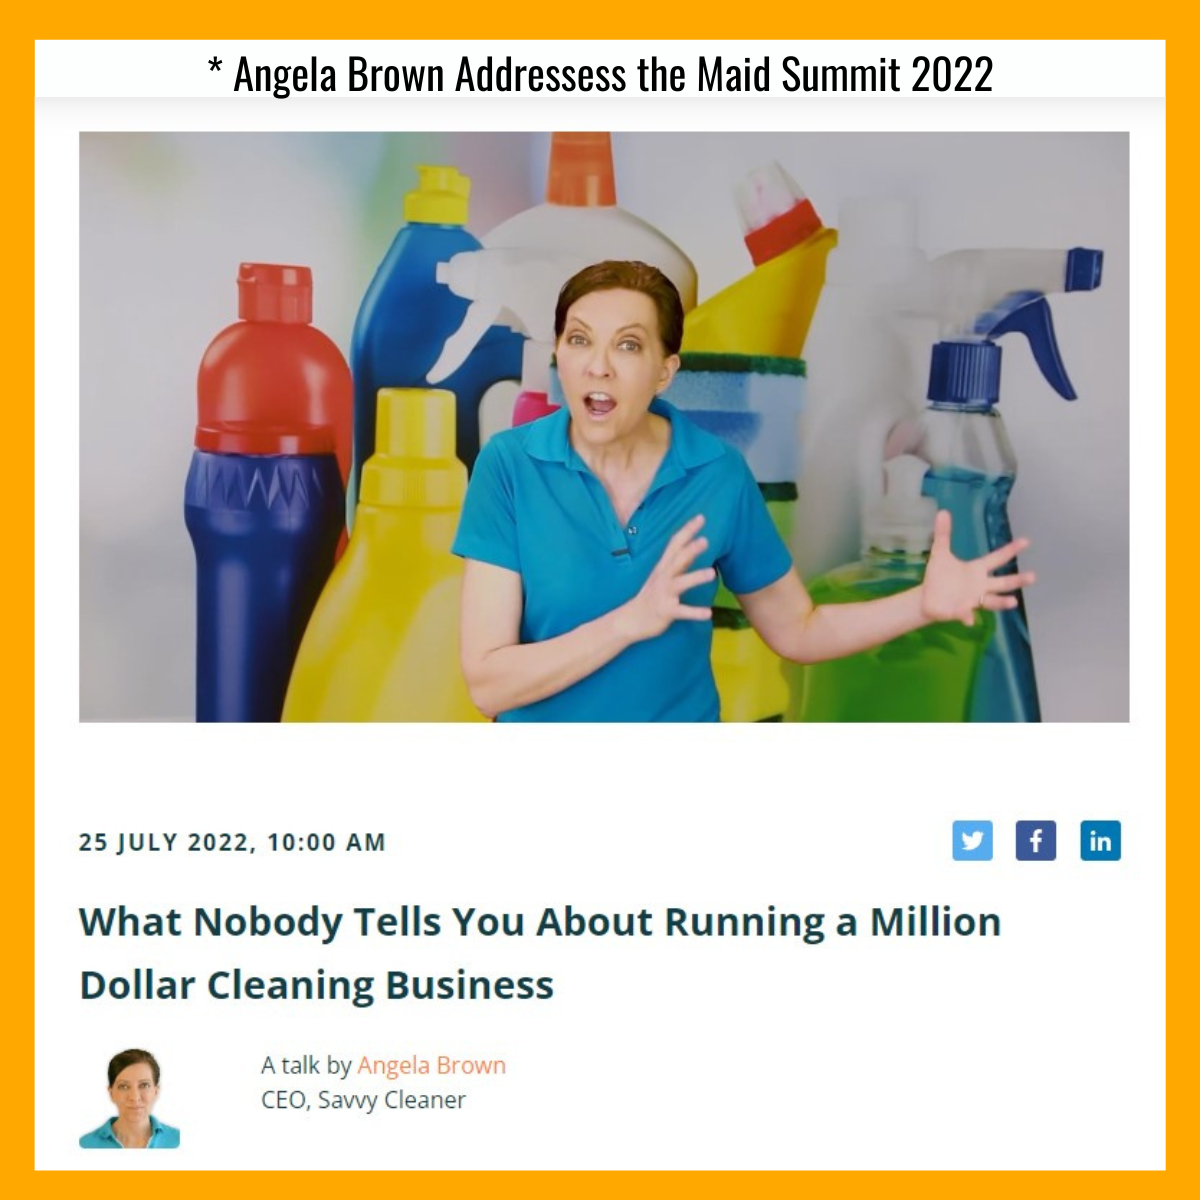 Angela Brown Addresses the Maid Summit 2022